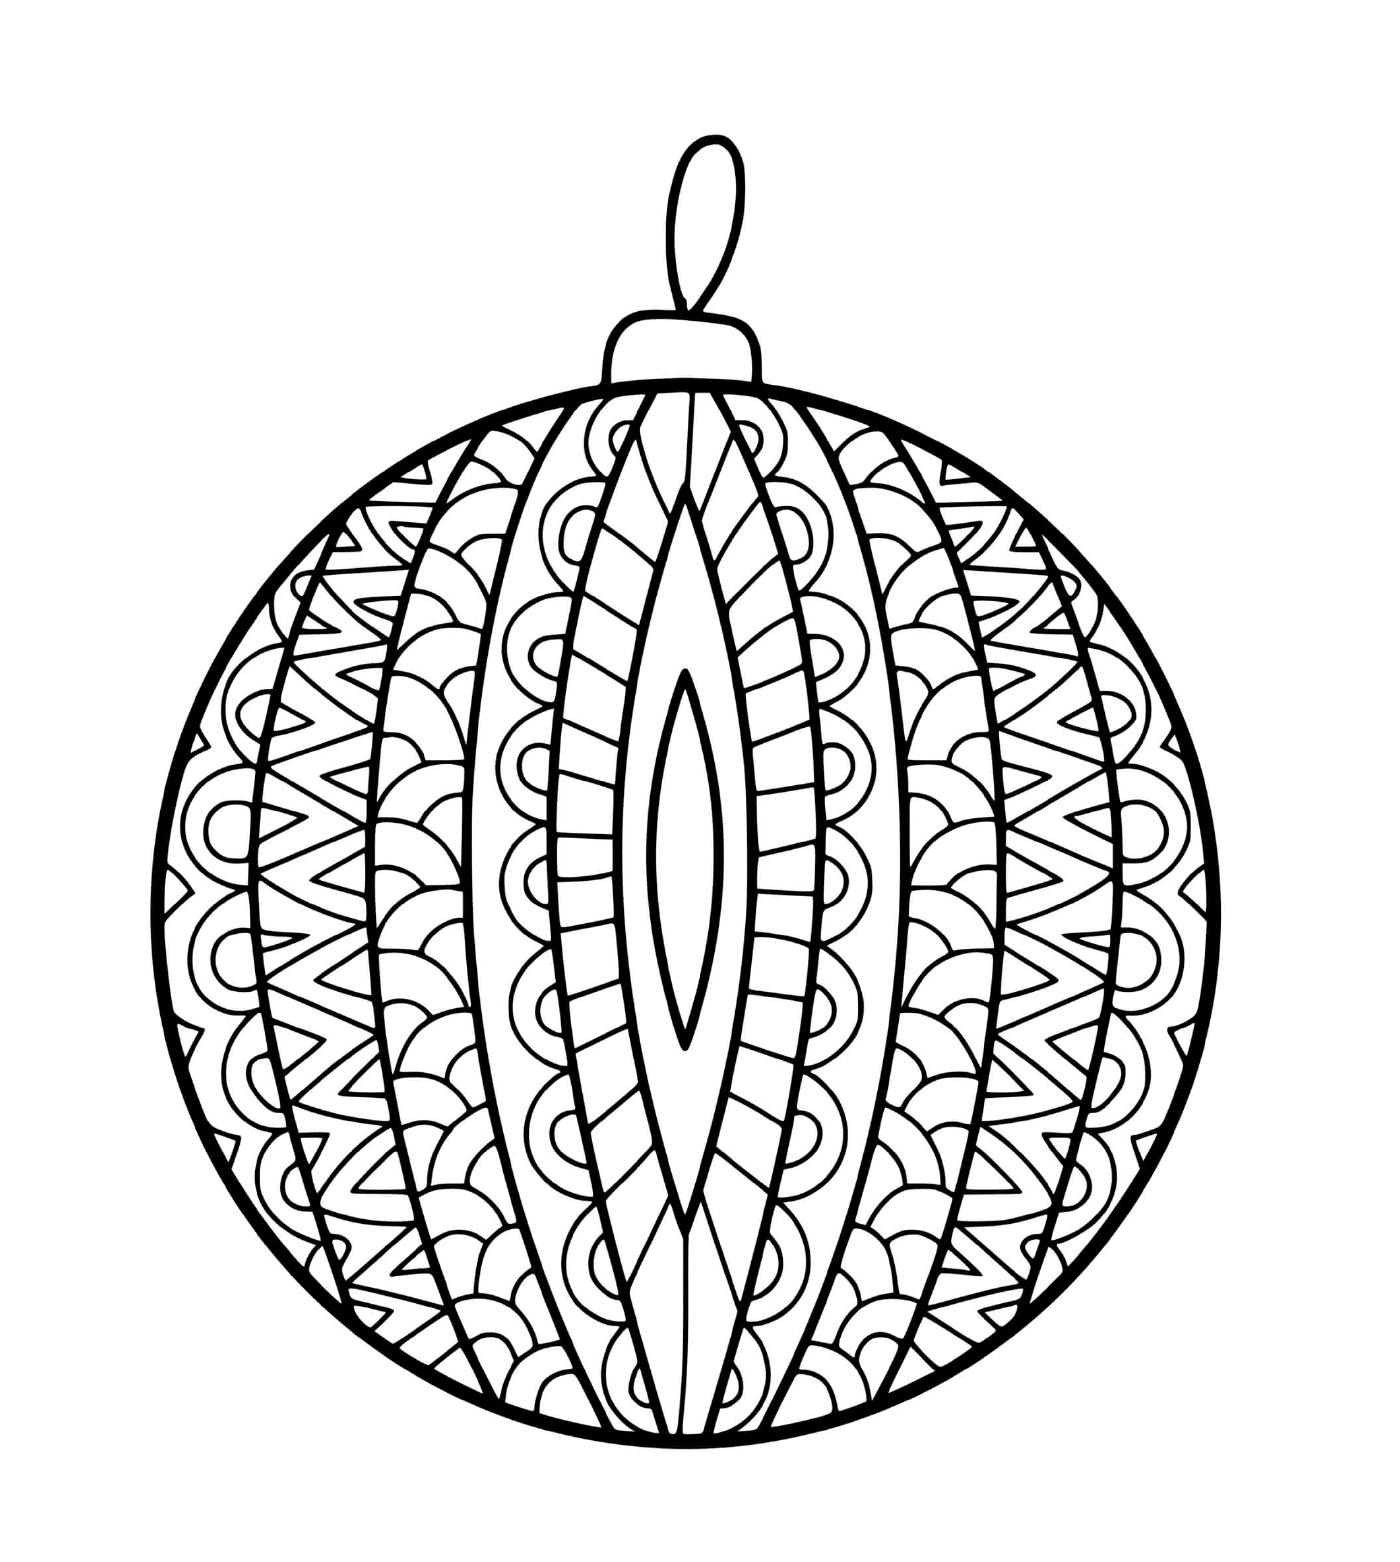  A zentangle Christmas ball for a tree 